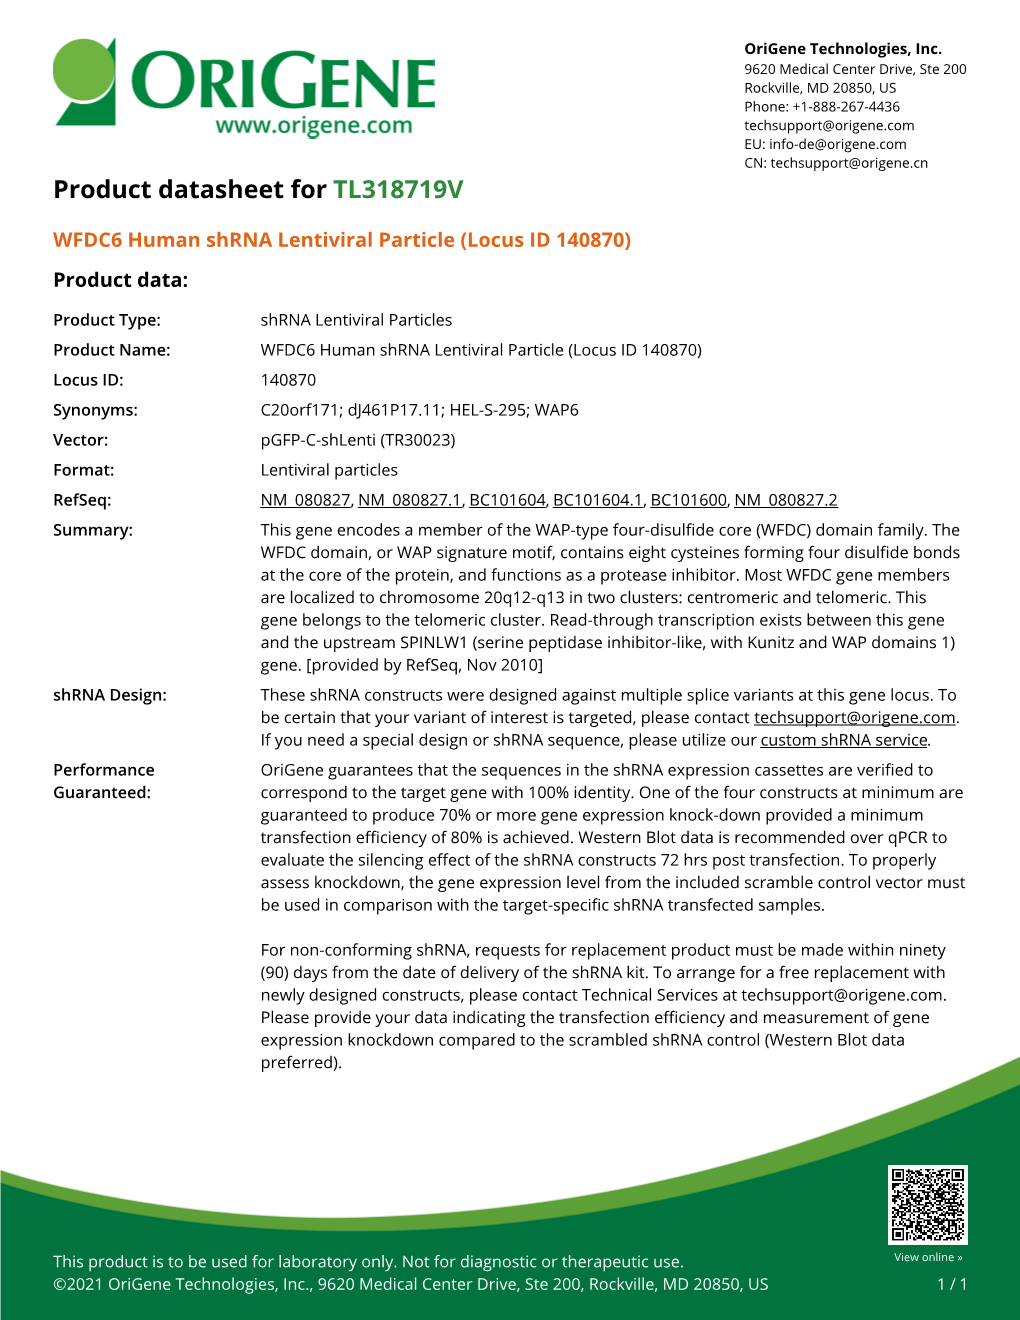 WFDC6 Human Shrna Lentiviral Particle (Locus ID 140870) Product Data